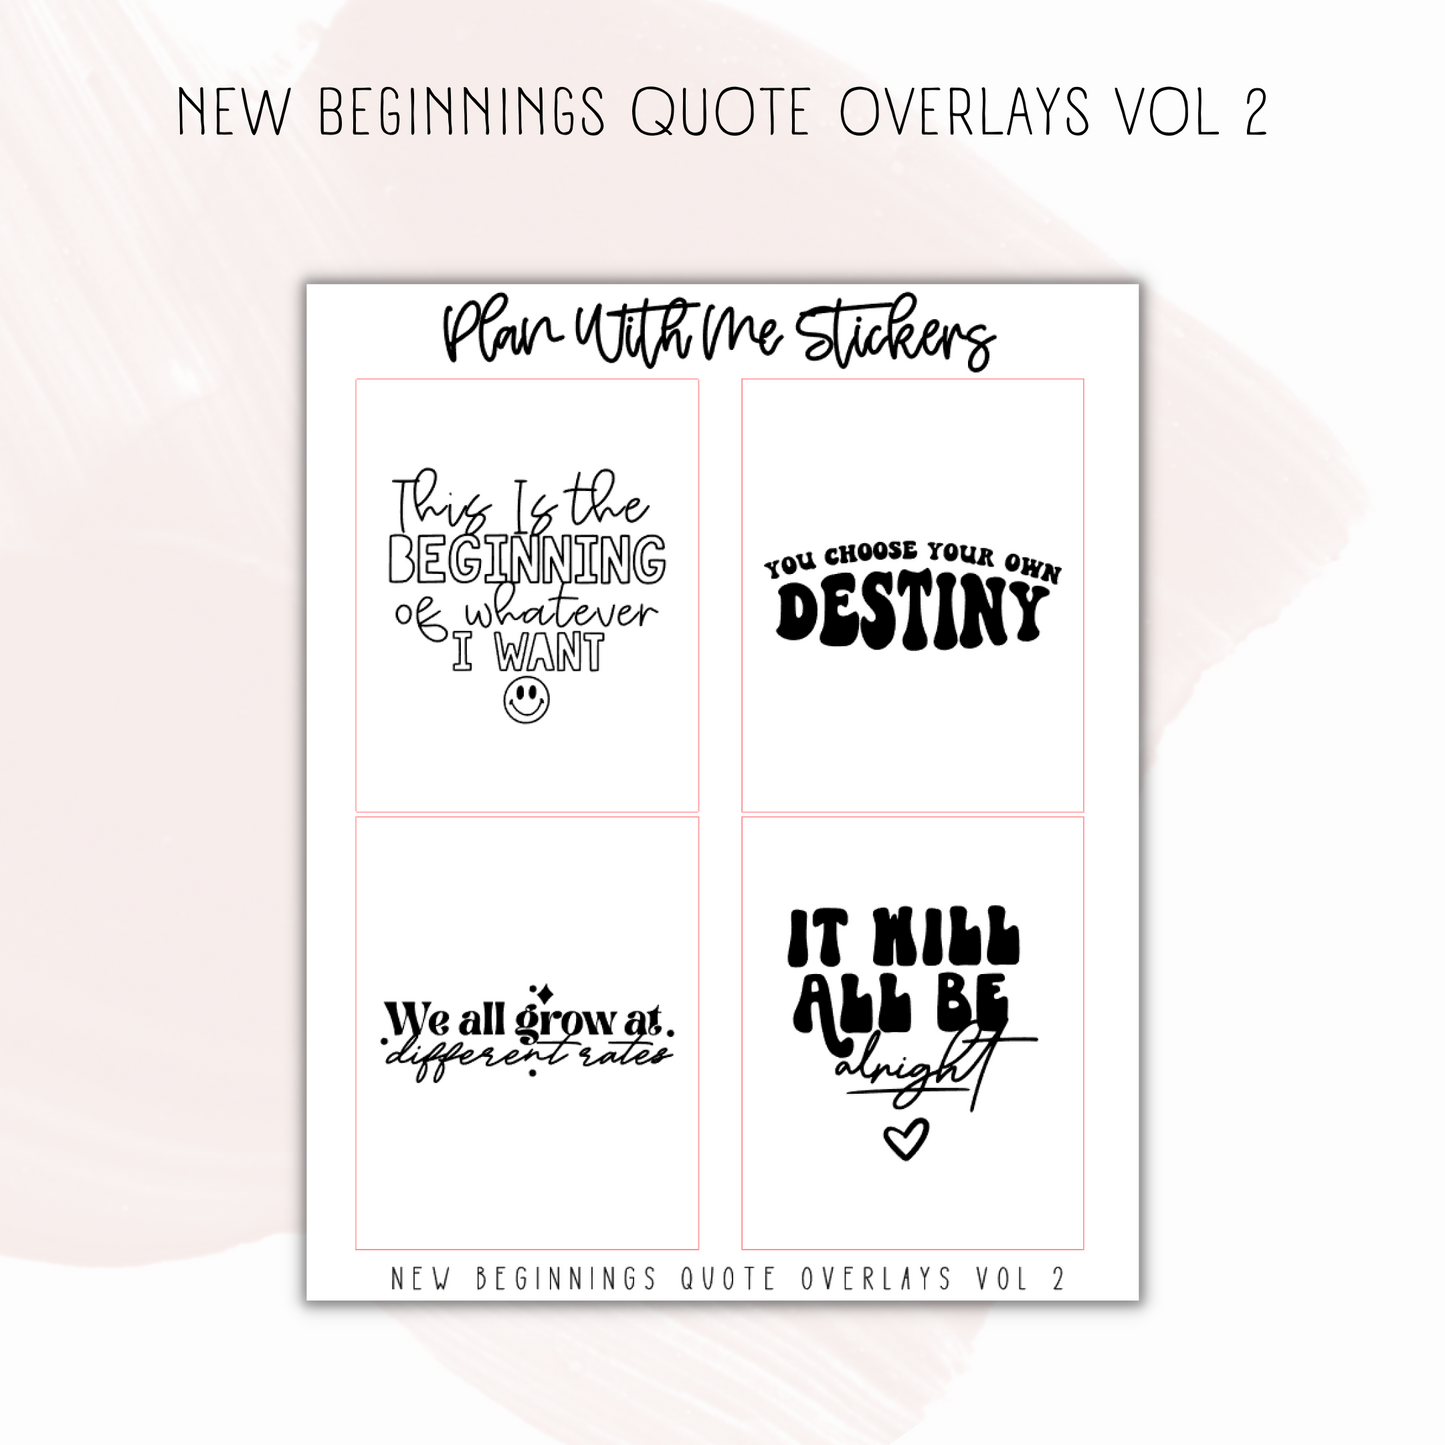 New Beginnings Quote Overlays Vol 2